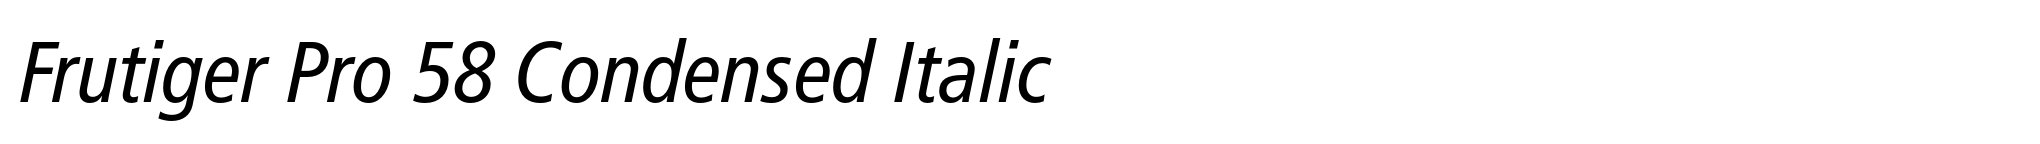 Frutiger Pro 58 Condensed Italic image